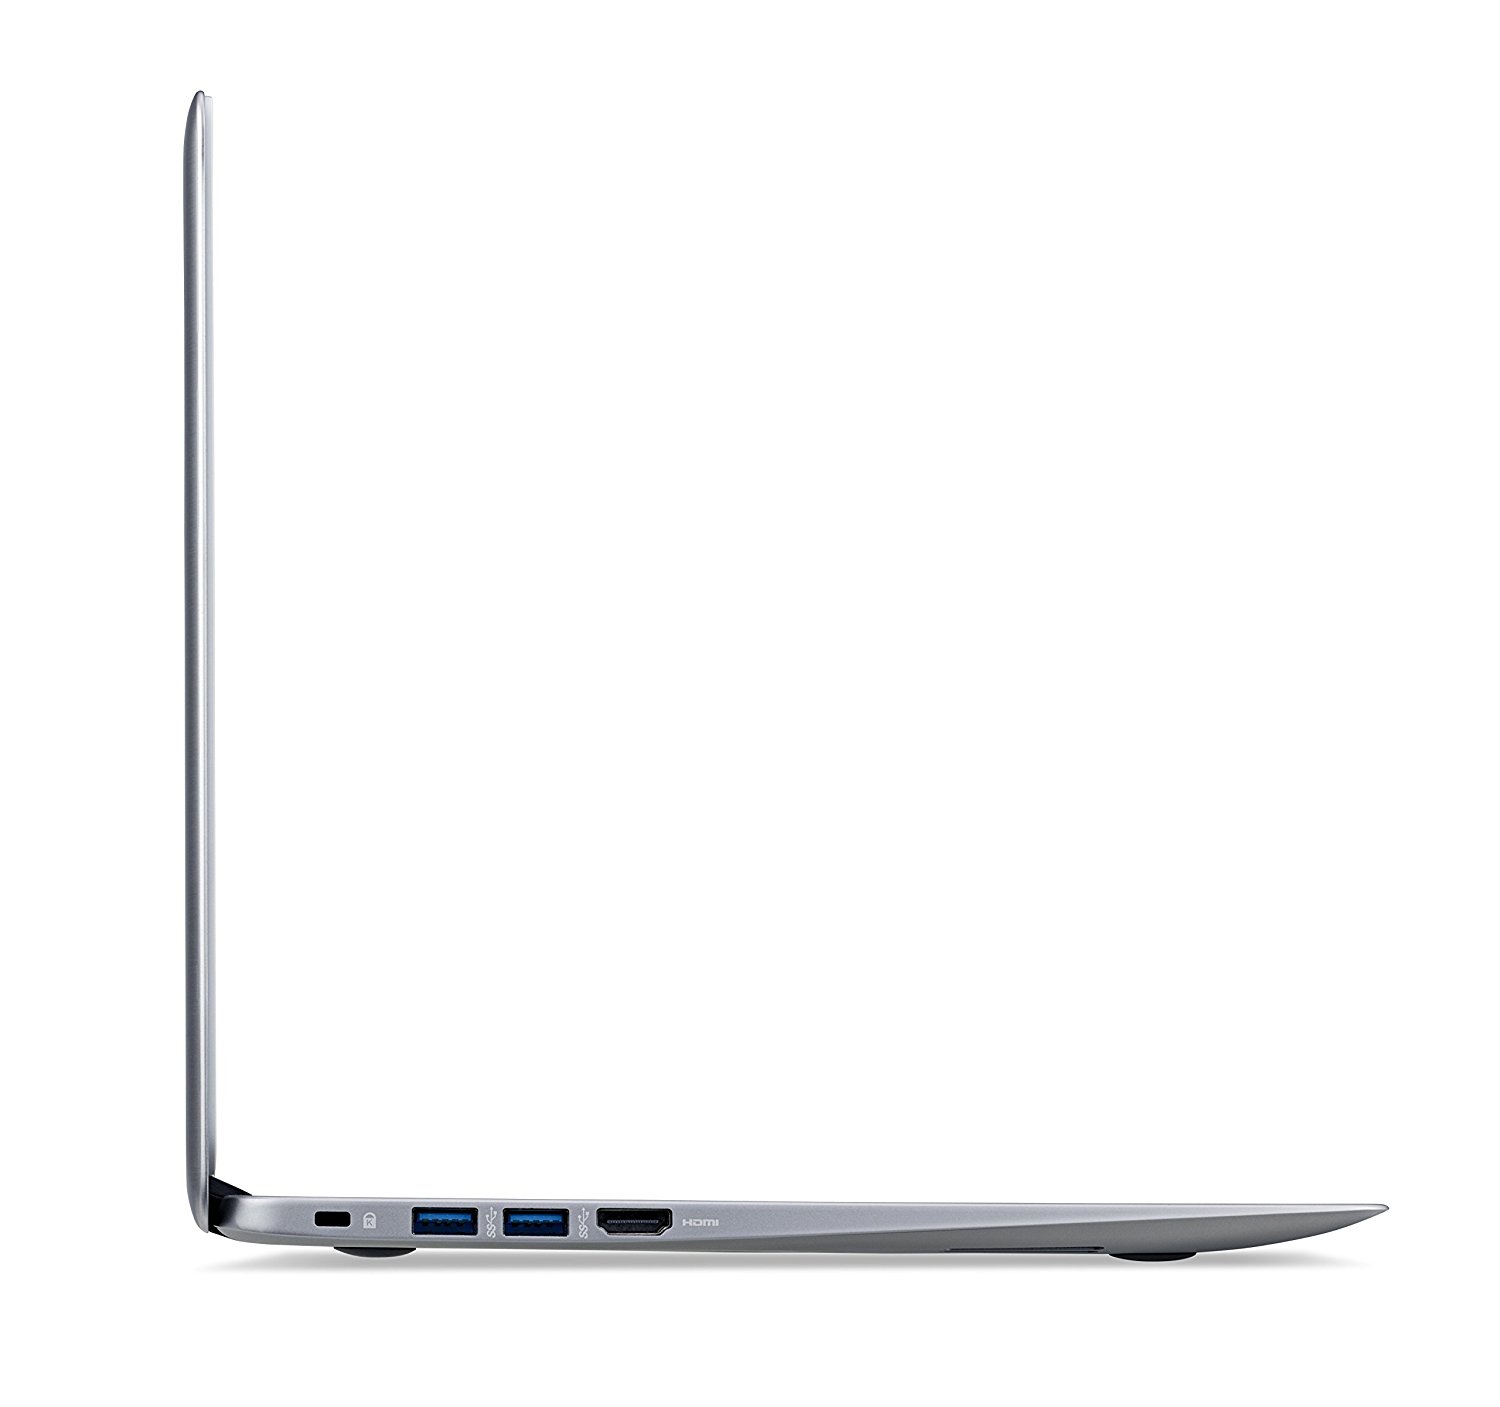 12.4 inch laptop